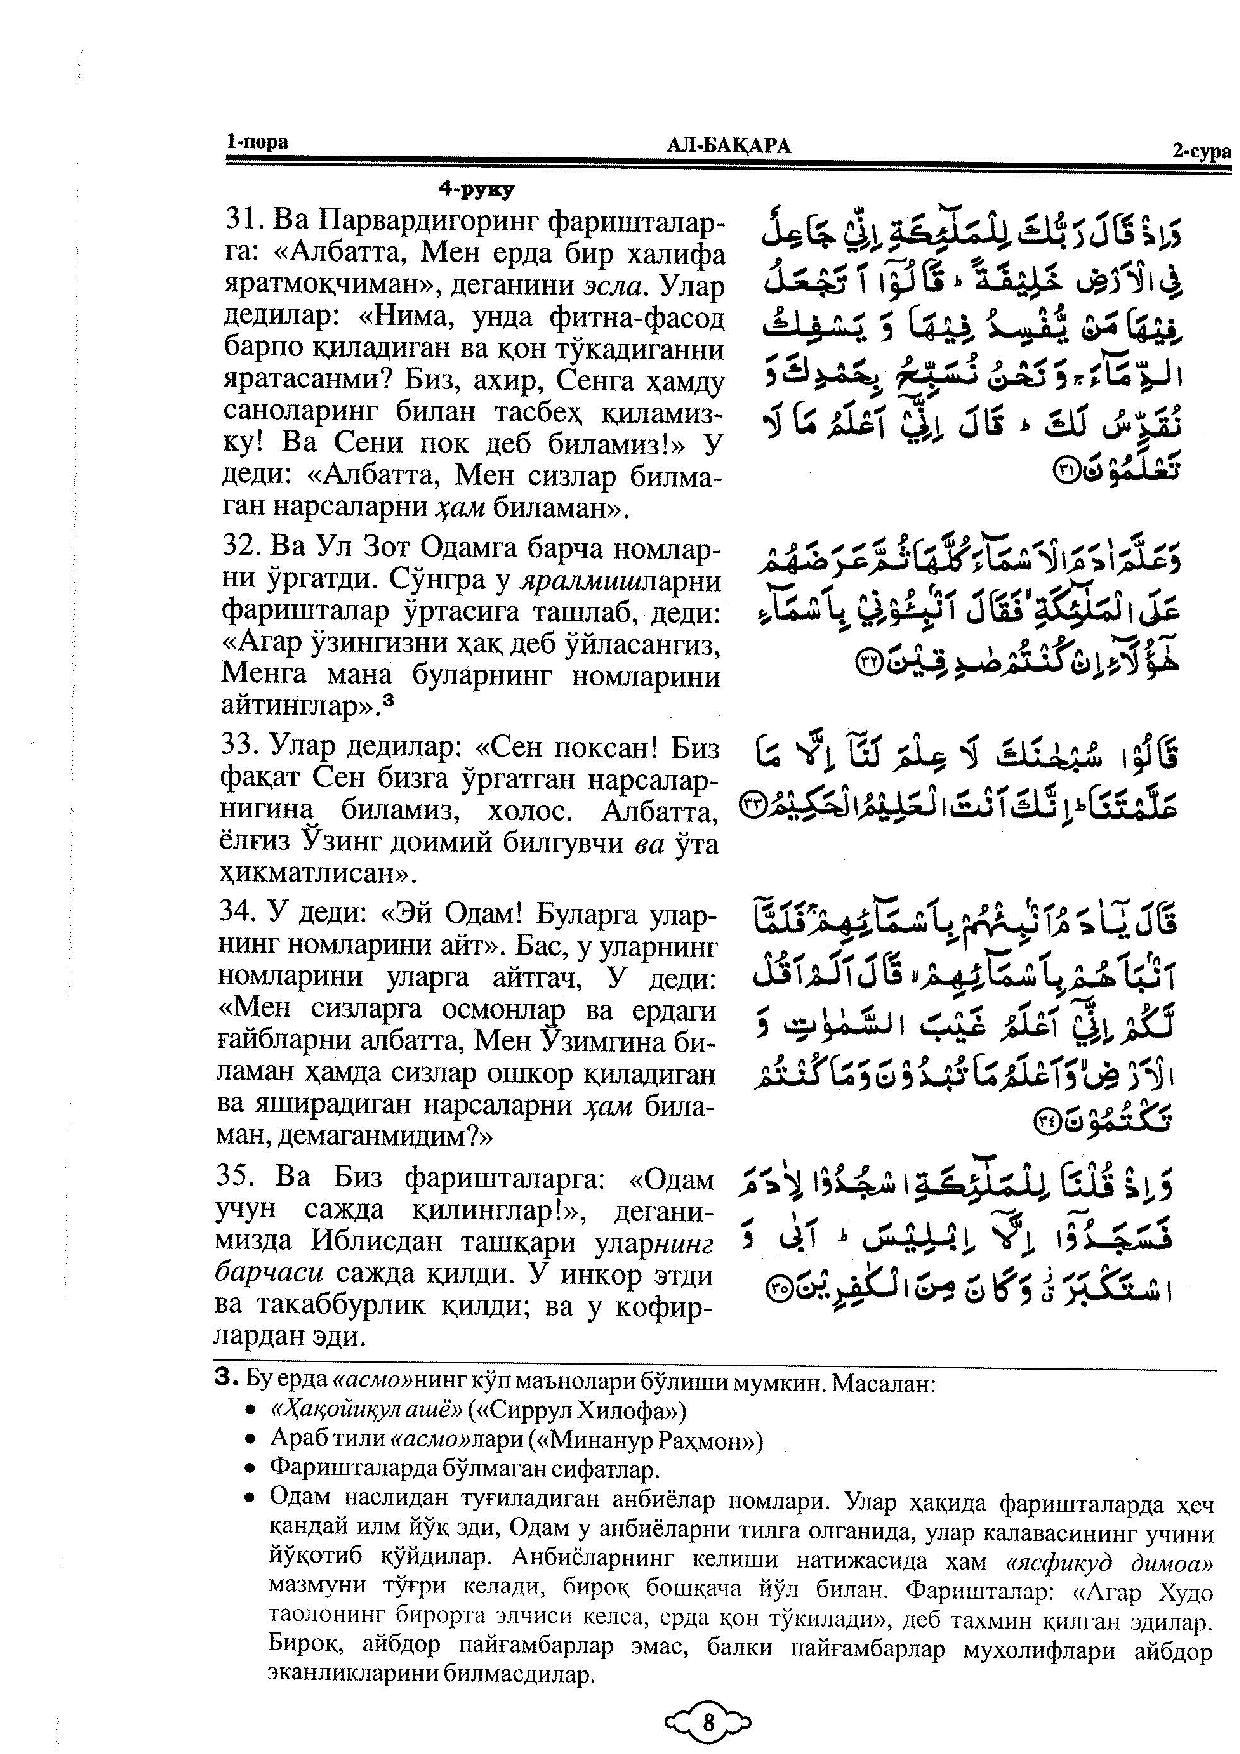 002-al-baqarah-page-006